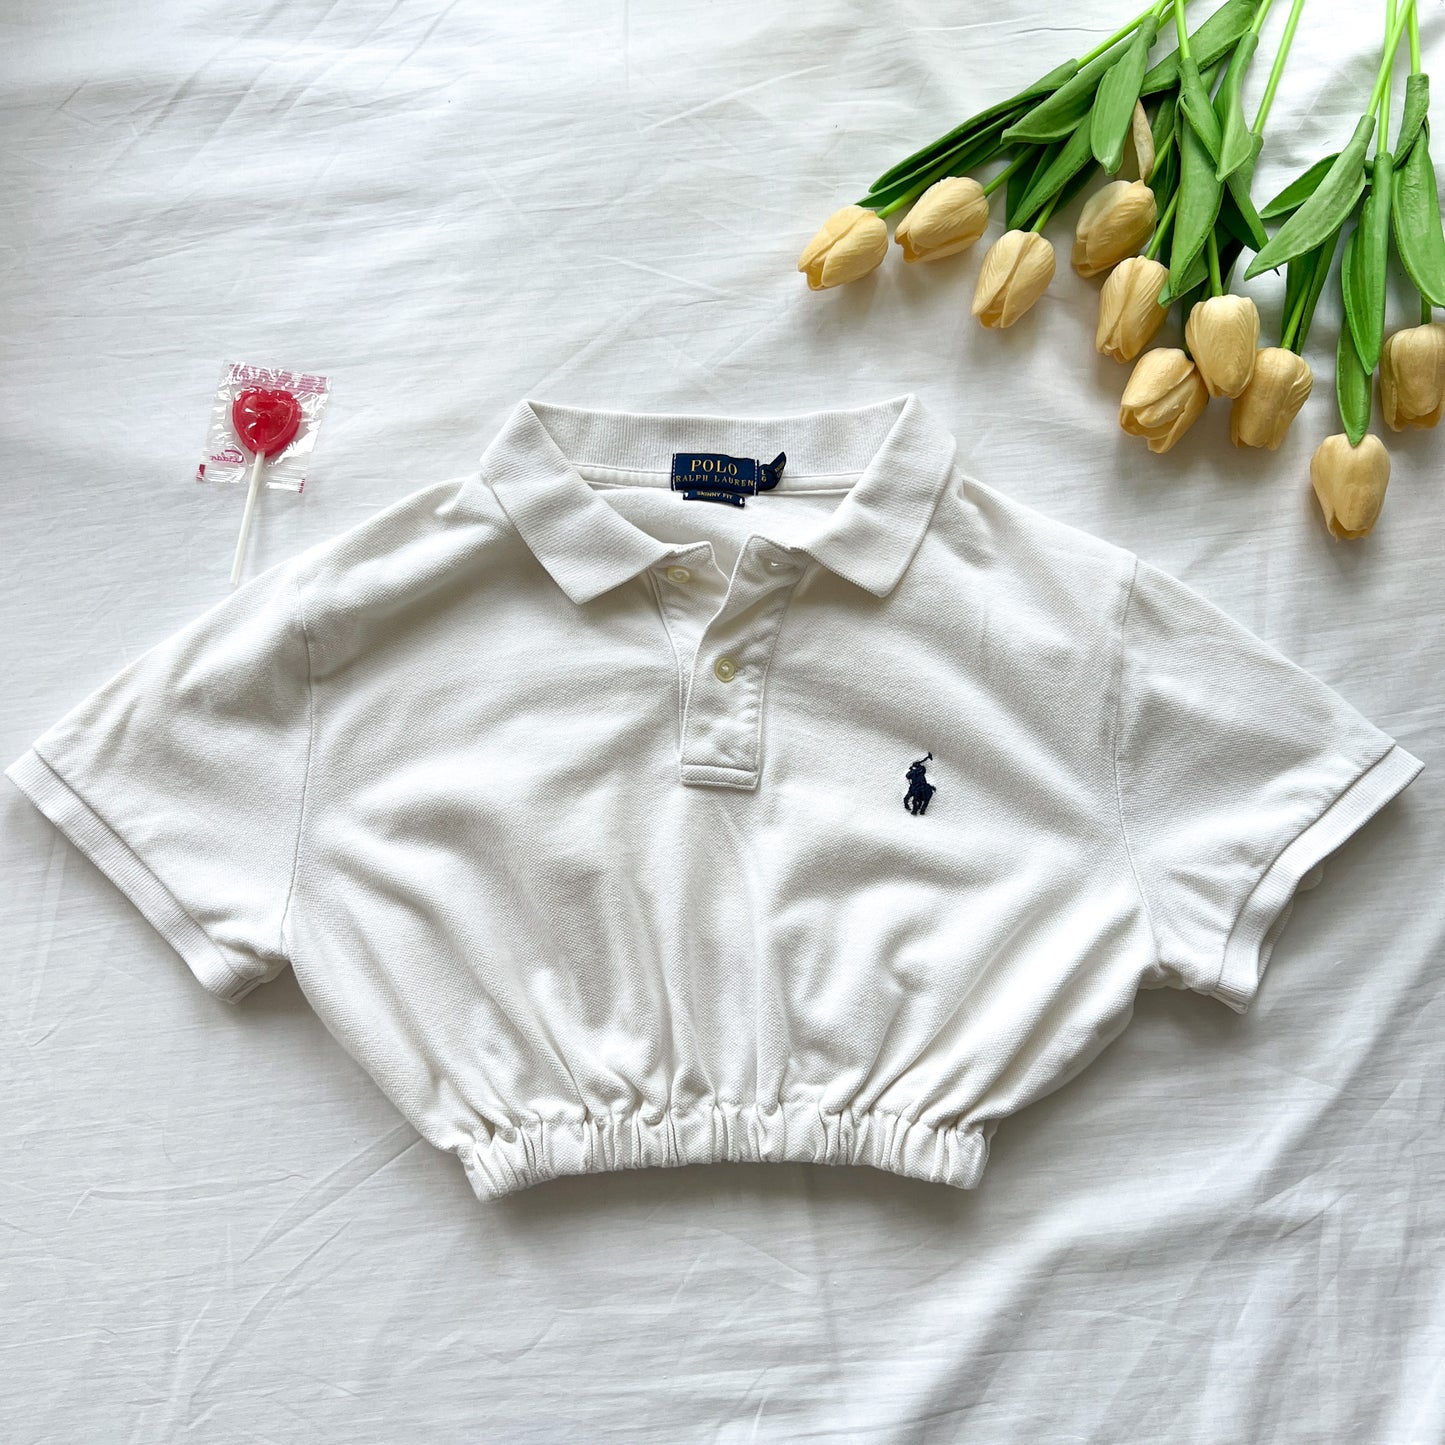 (XS) Ralph Lauren polo crop vintage white petite